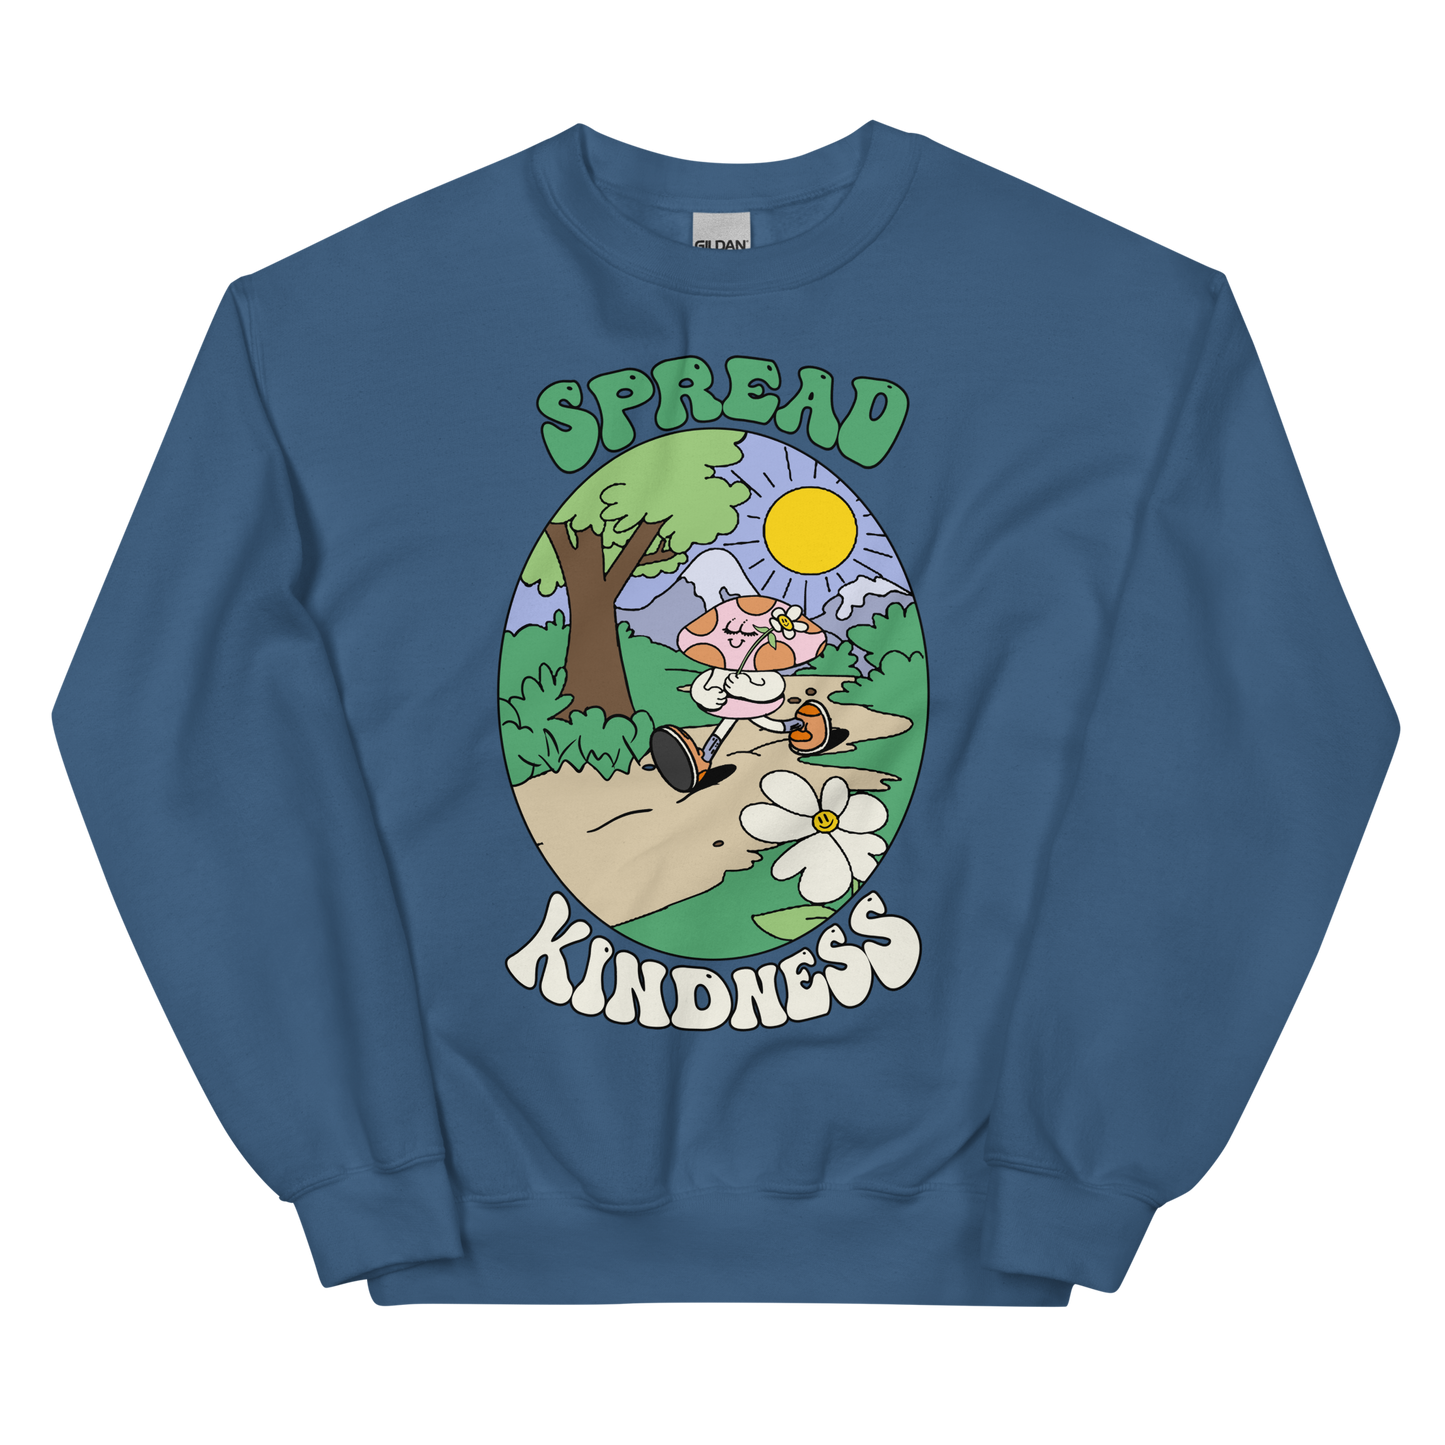 Spread Kindness Graphic Unisex Sweatshirt